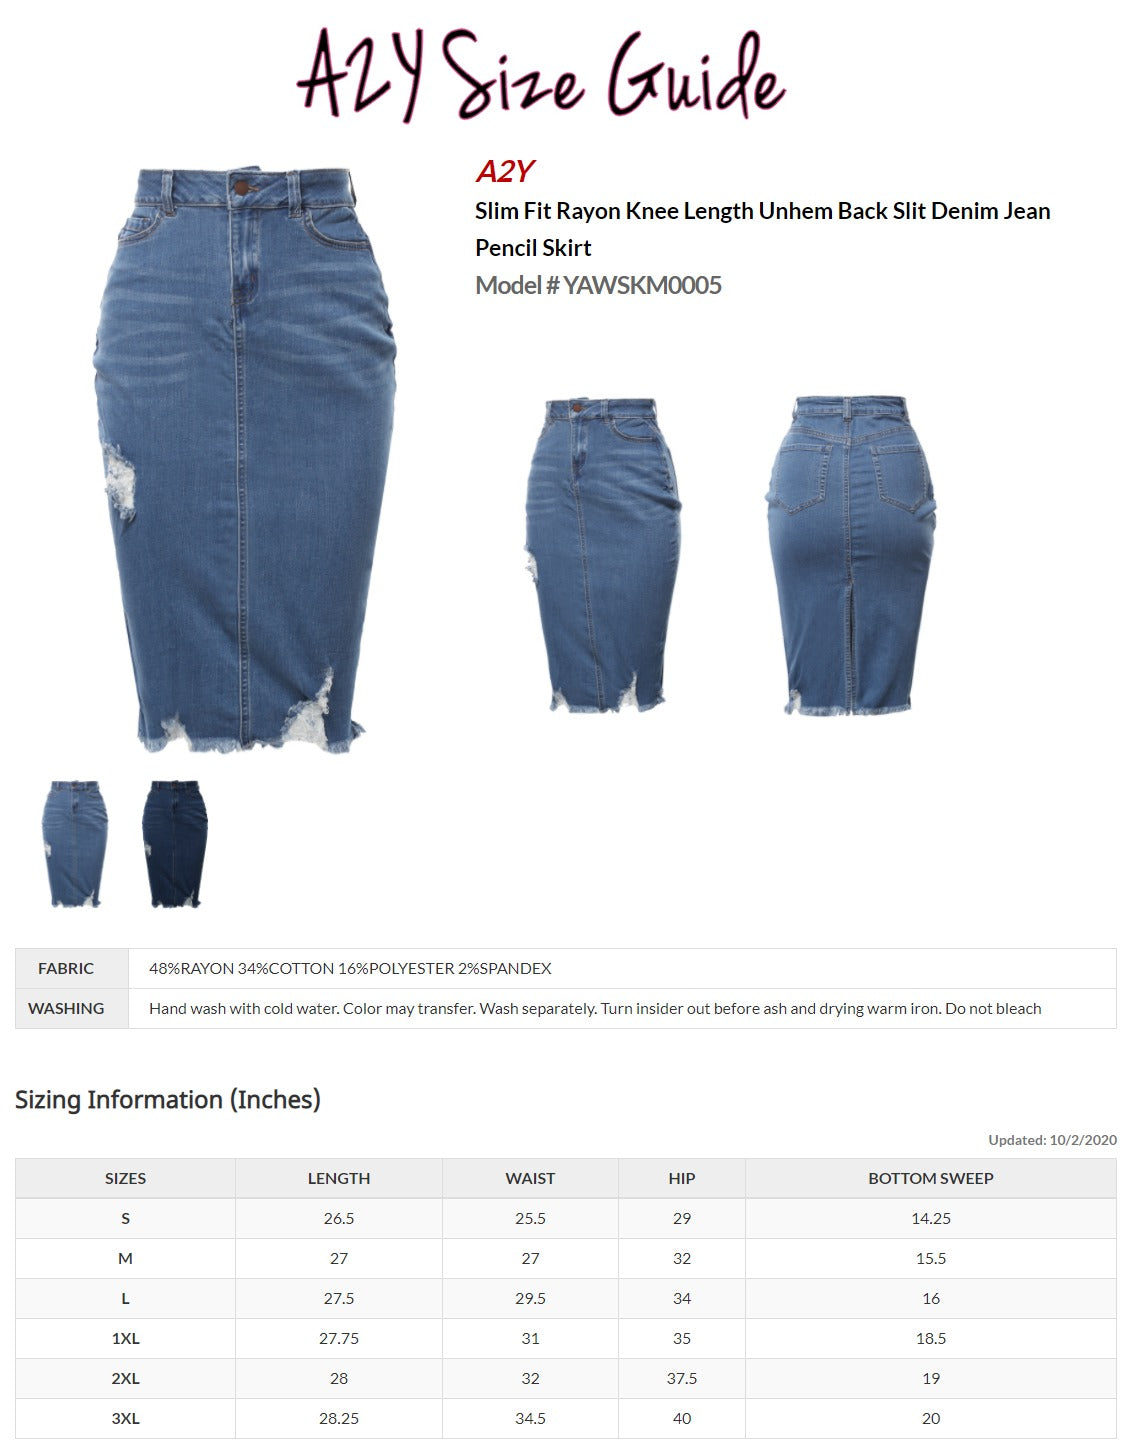 Slim Fit Rayon Knee Length Unhem Back Slit Denim Jean Pencil Skirt Dar – A2Y